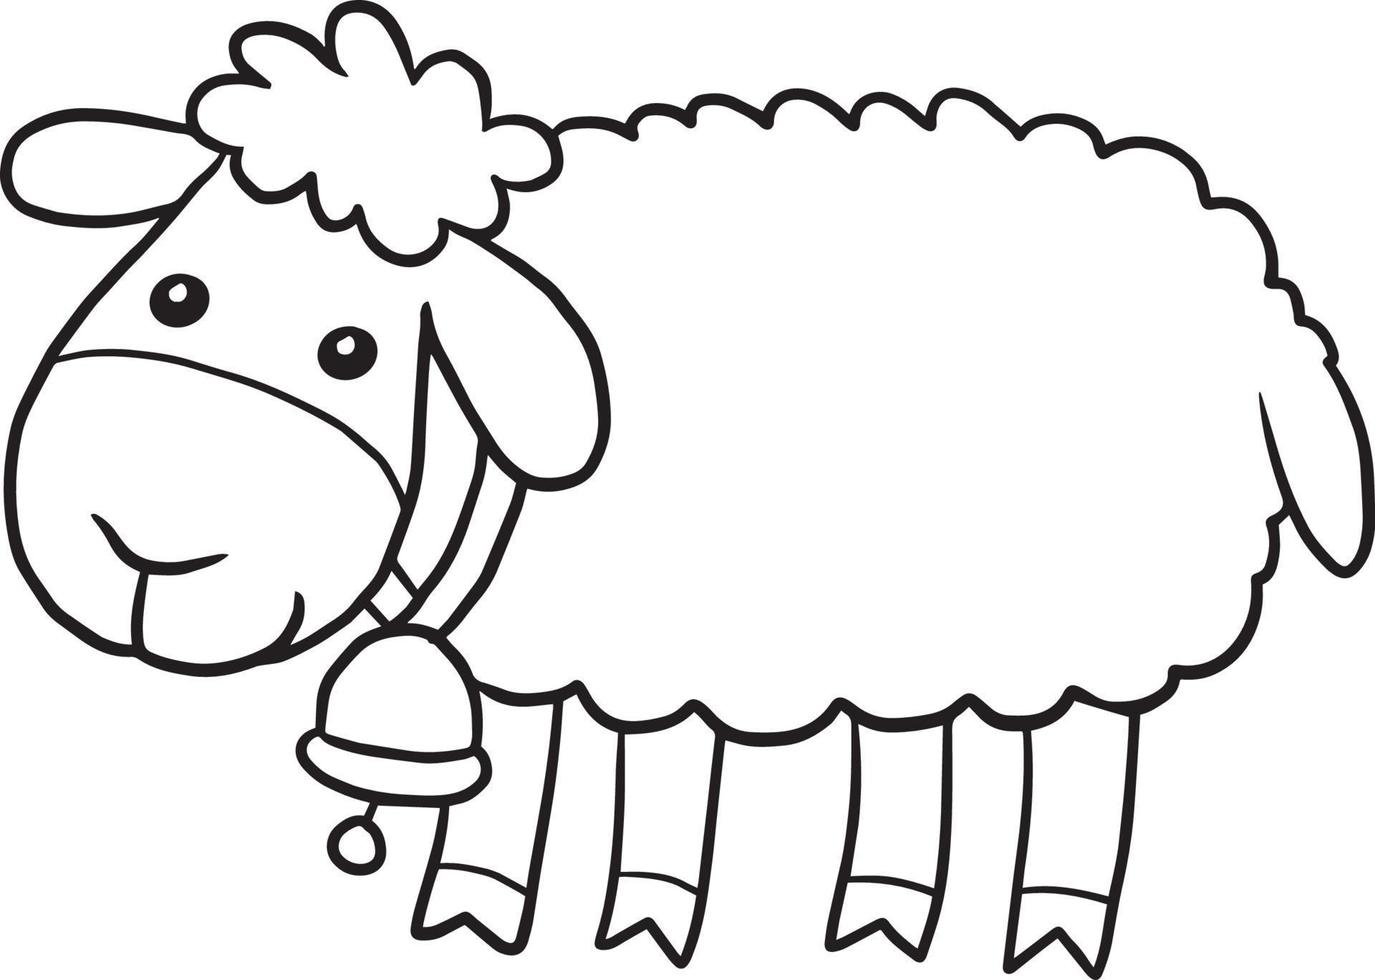 sheep doodle cartoon kawaii anime cute coloring page vector